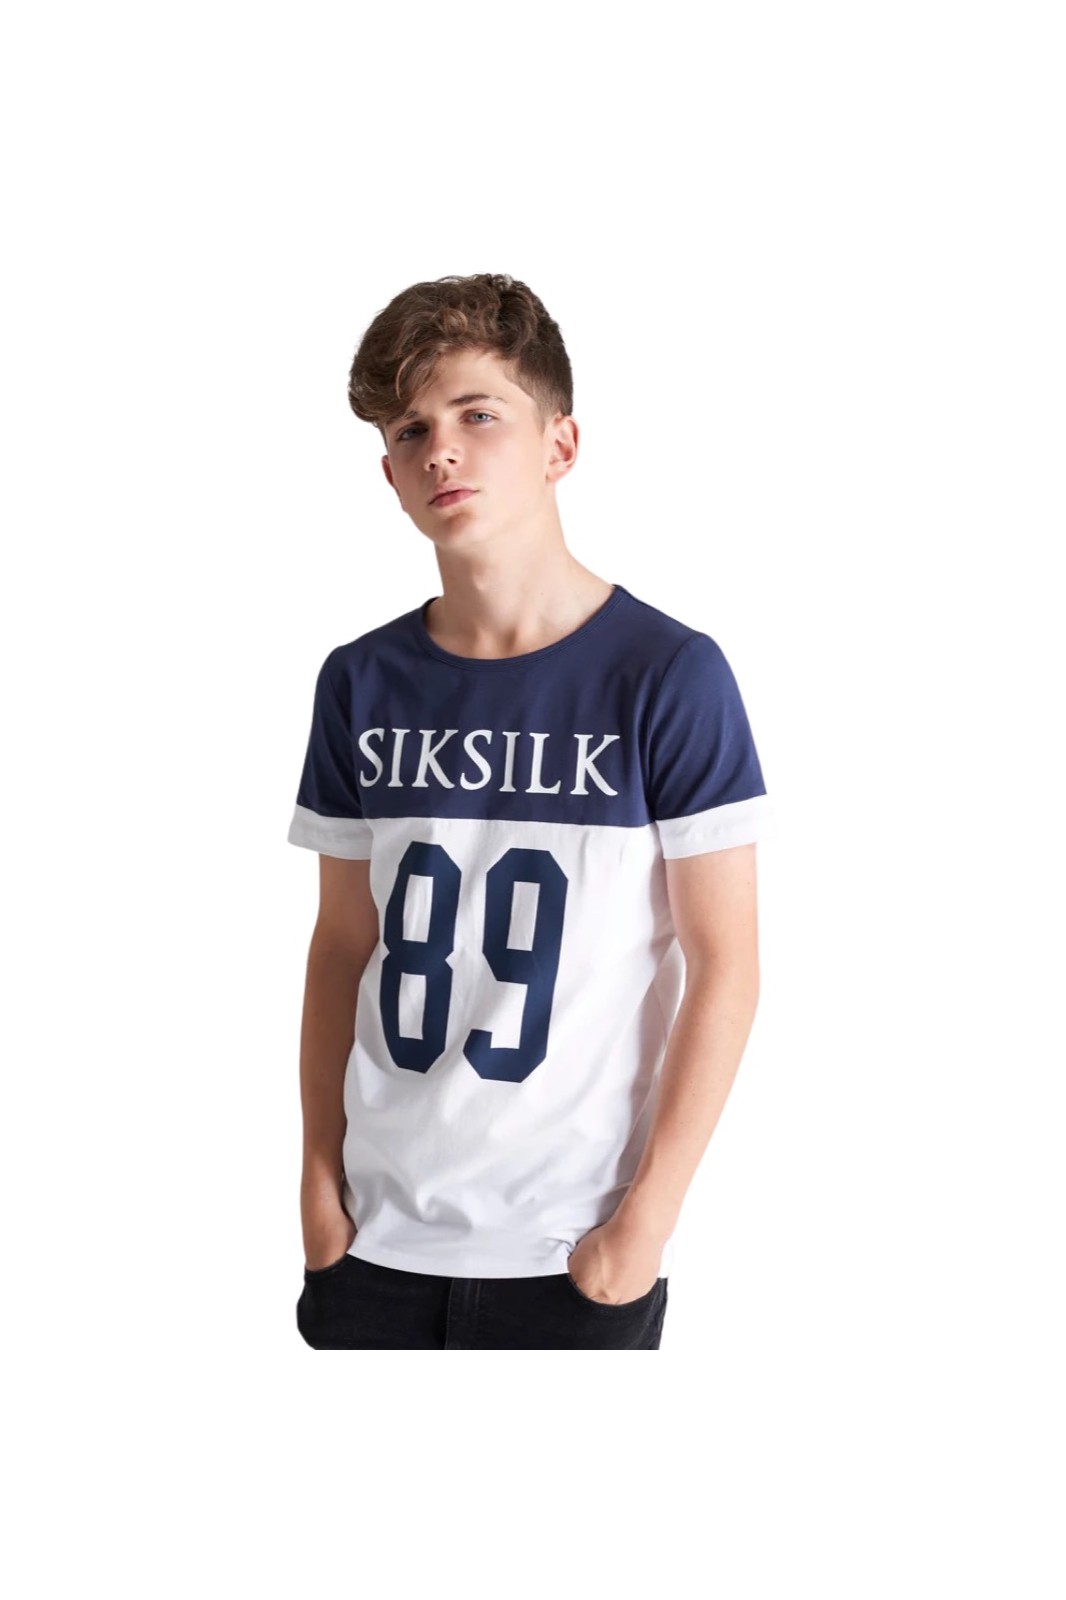 Genuino enchufe Poner la mesa Camiseta SikSilk Jr 89 Azul Marino y Blanco